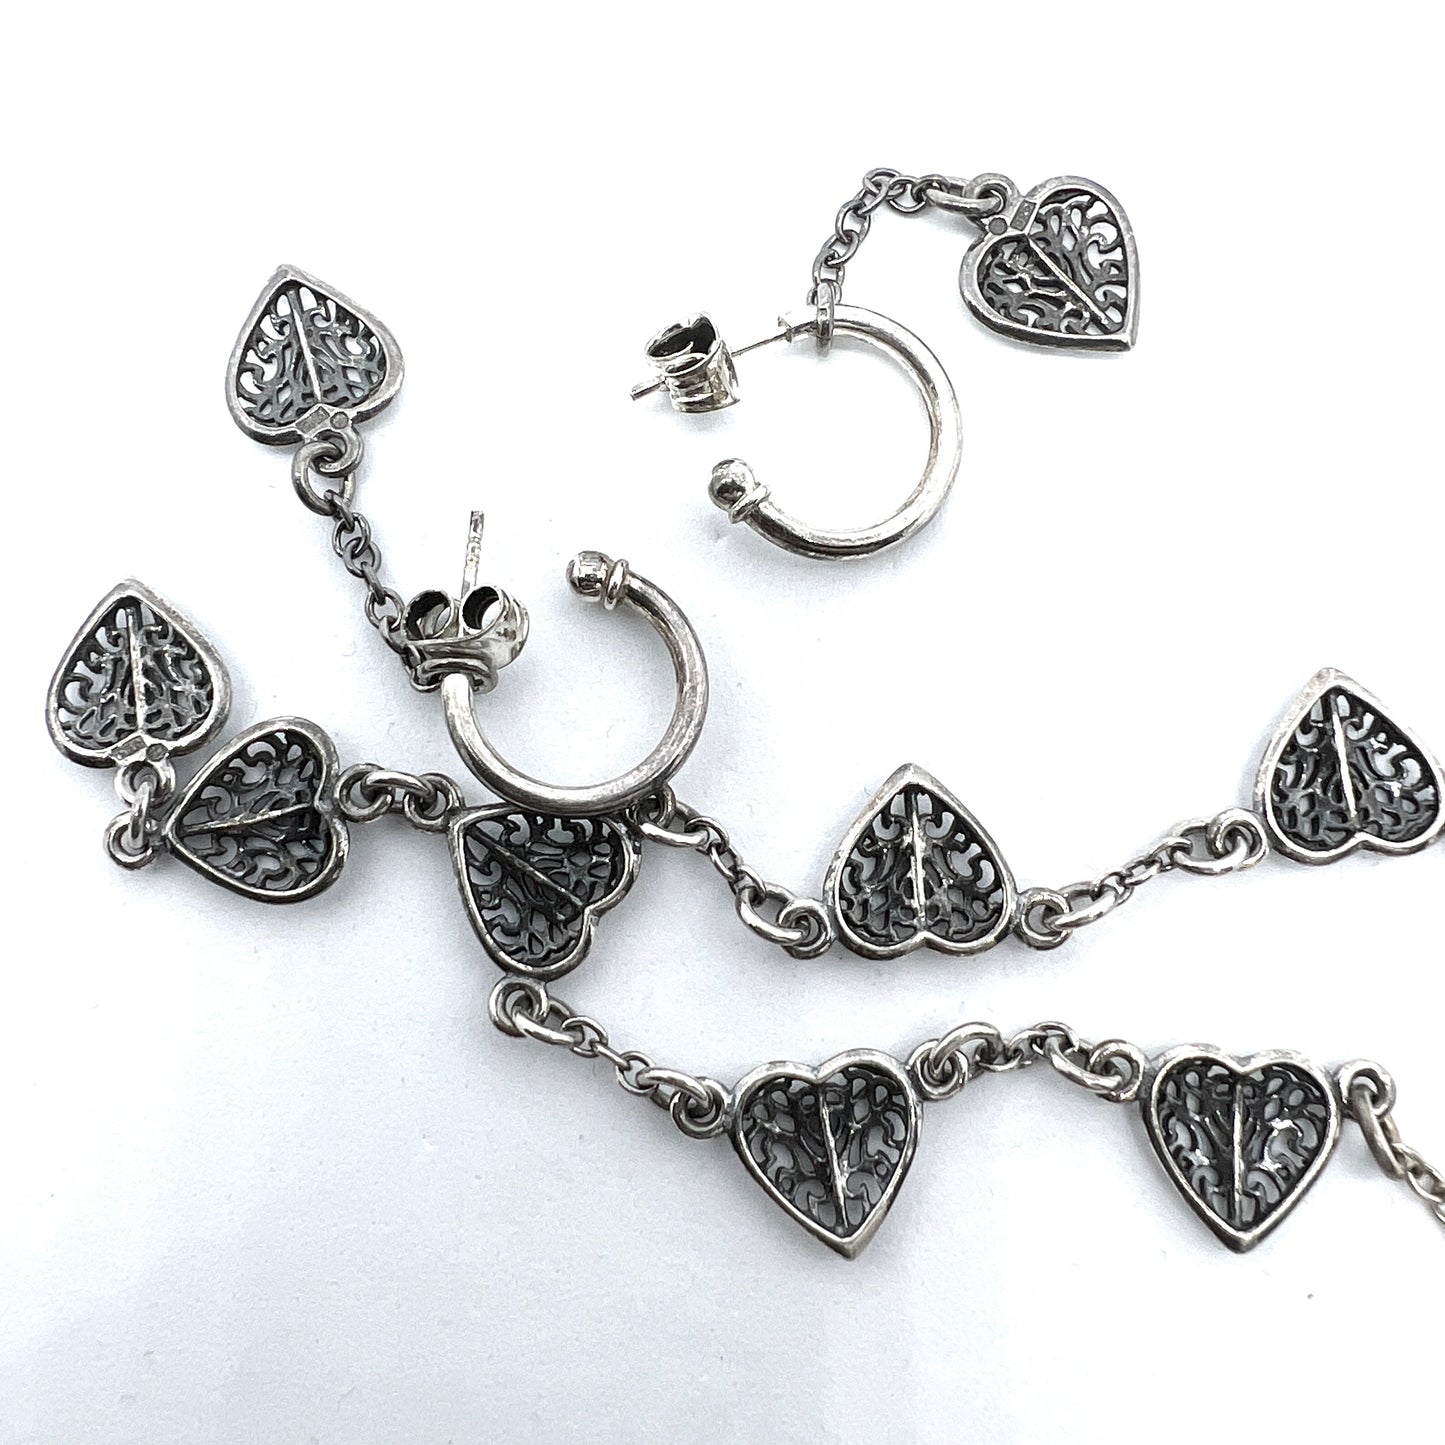 Kalevala Koru, Finland Vintage Sterling Silver Set. Hearts Necklace and Earrings.